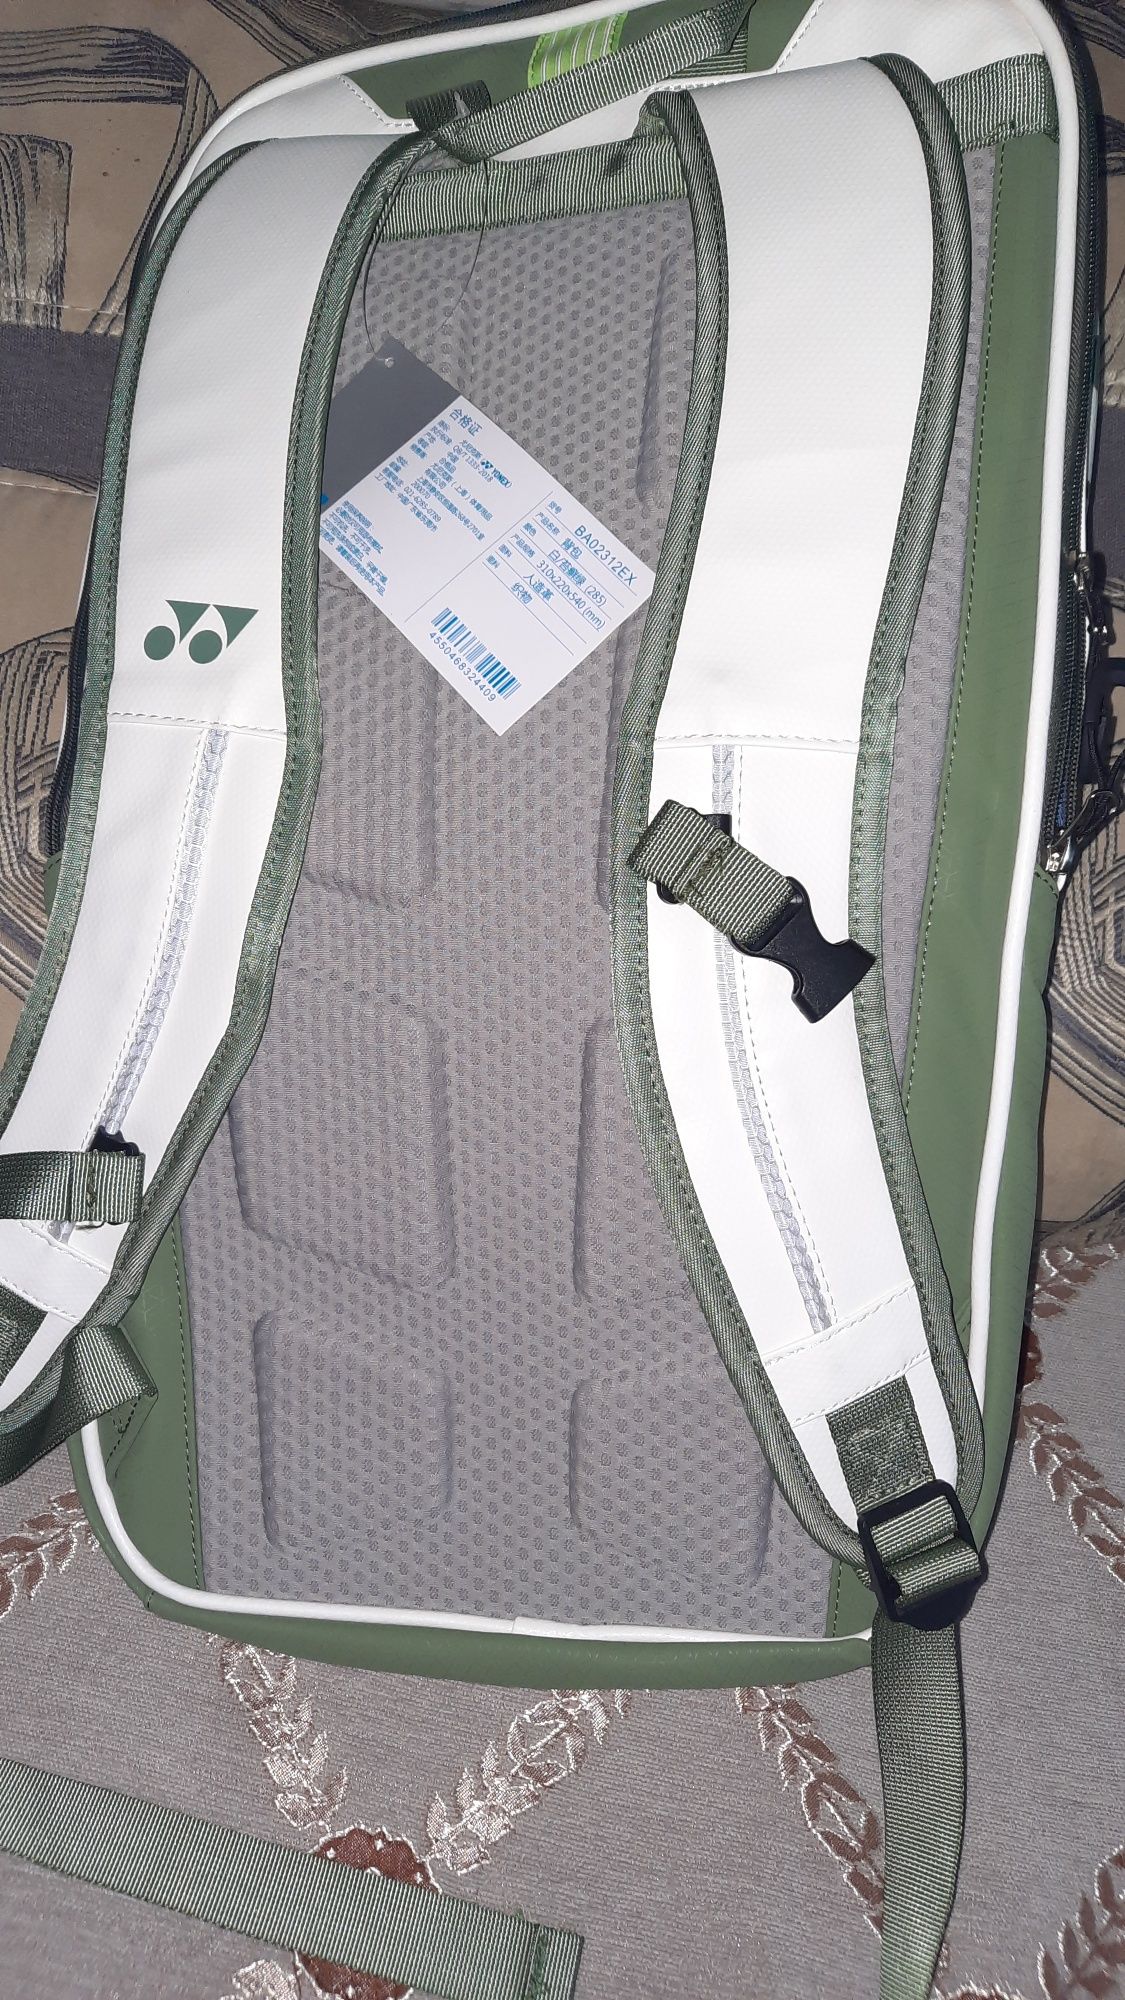 Спортивная сумка-рюкзак YONEX